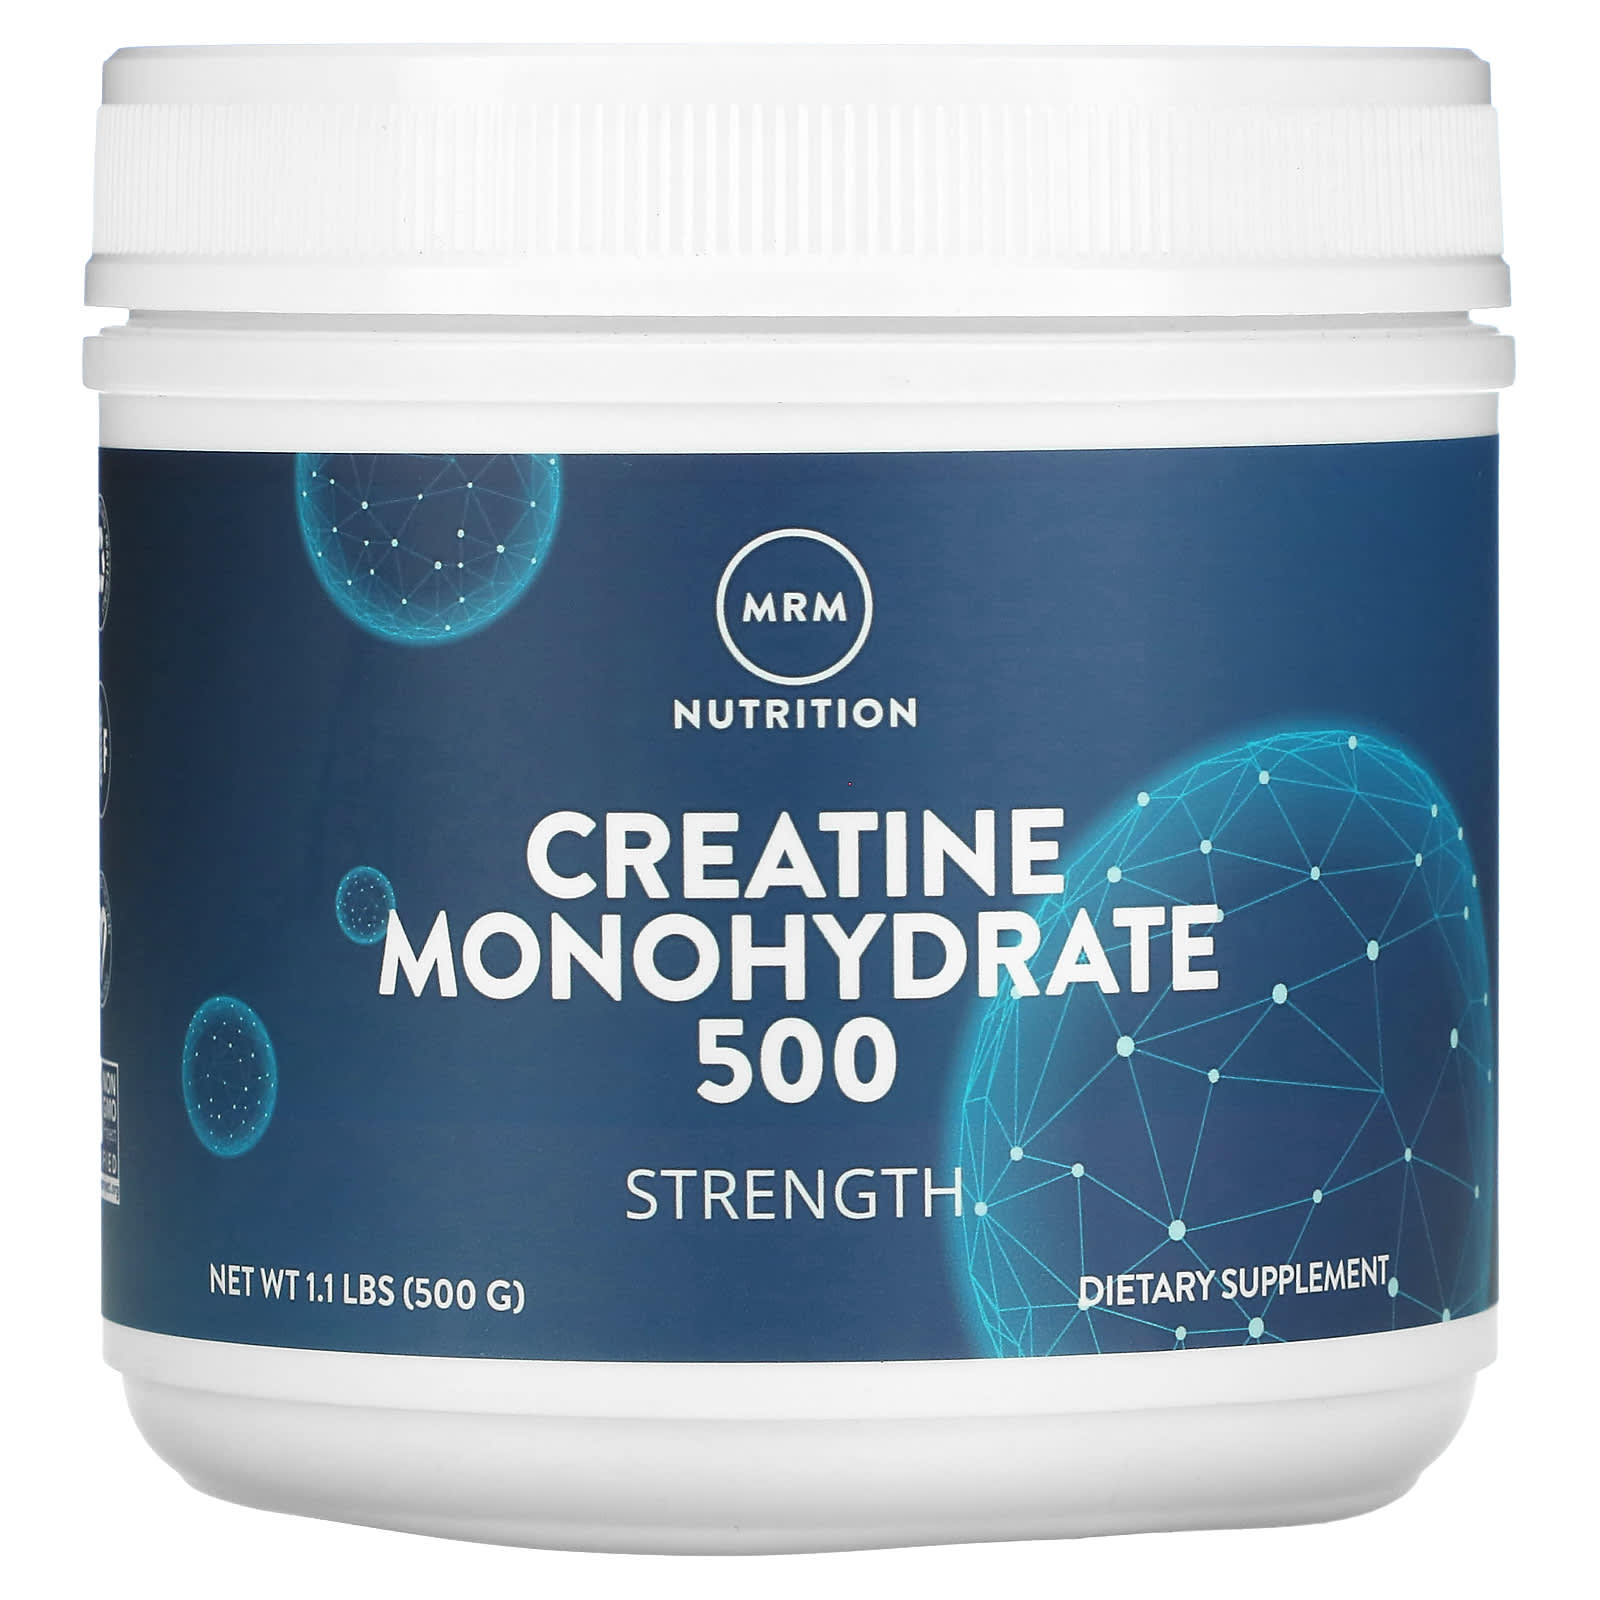 Моногидрат Креатина 500 MRM Nutrition, 500 г now foods спорт моногидрат креатина тонкоизмельченный 1 1 фунта 500 г